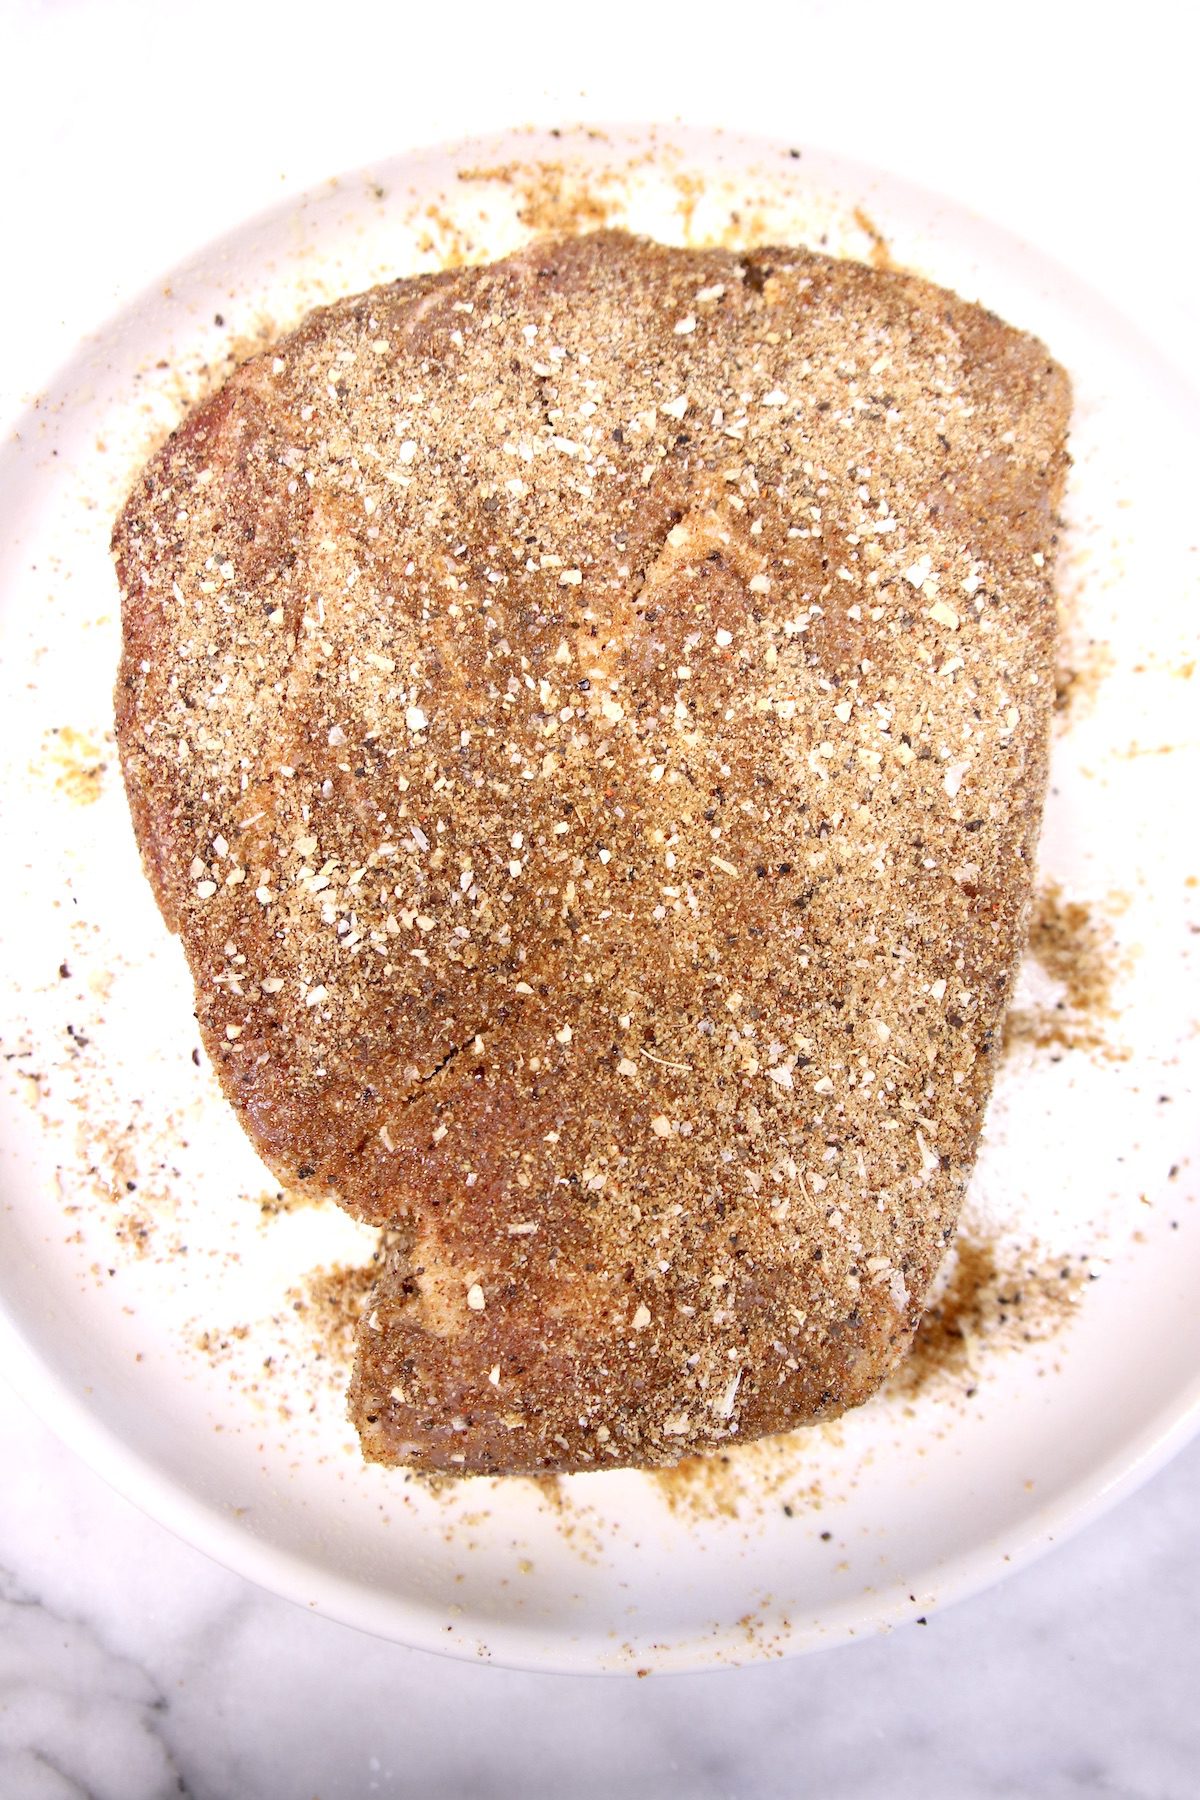 chuck roast with dry rub seasoning read to grill